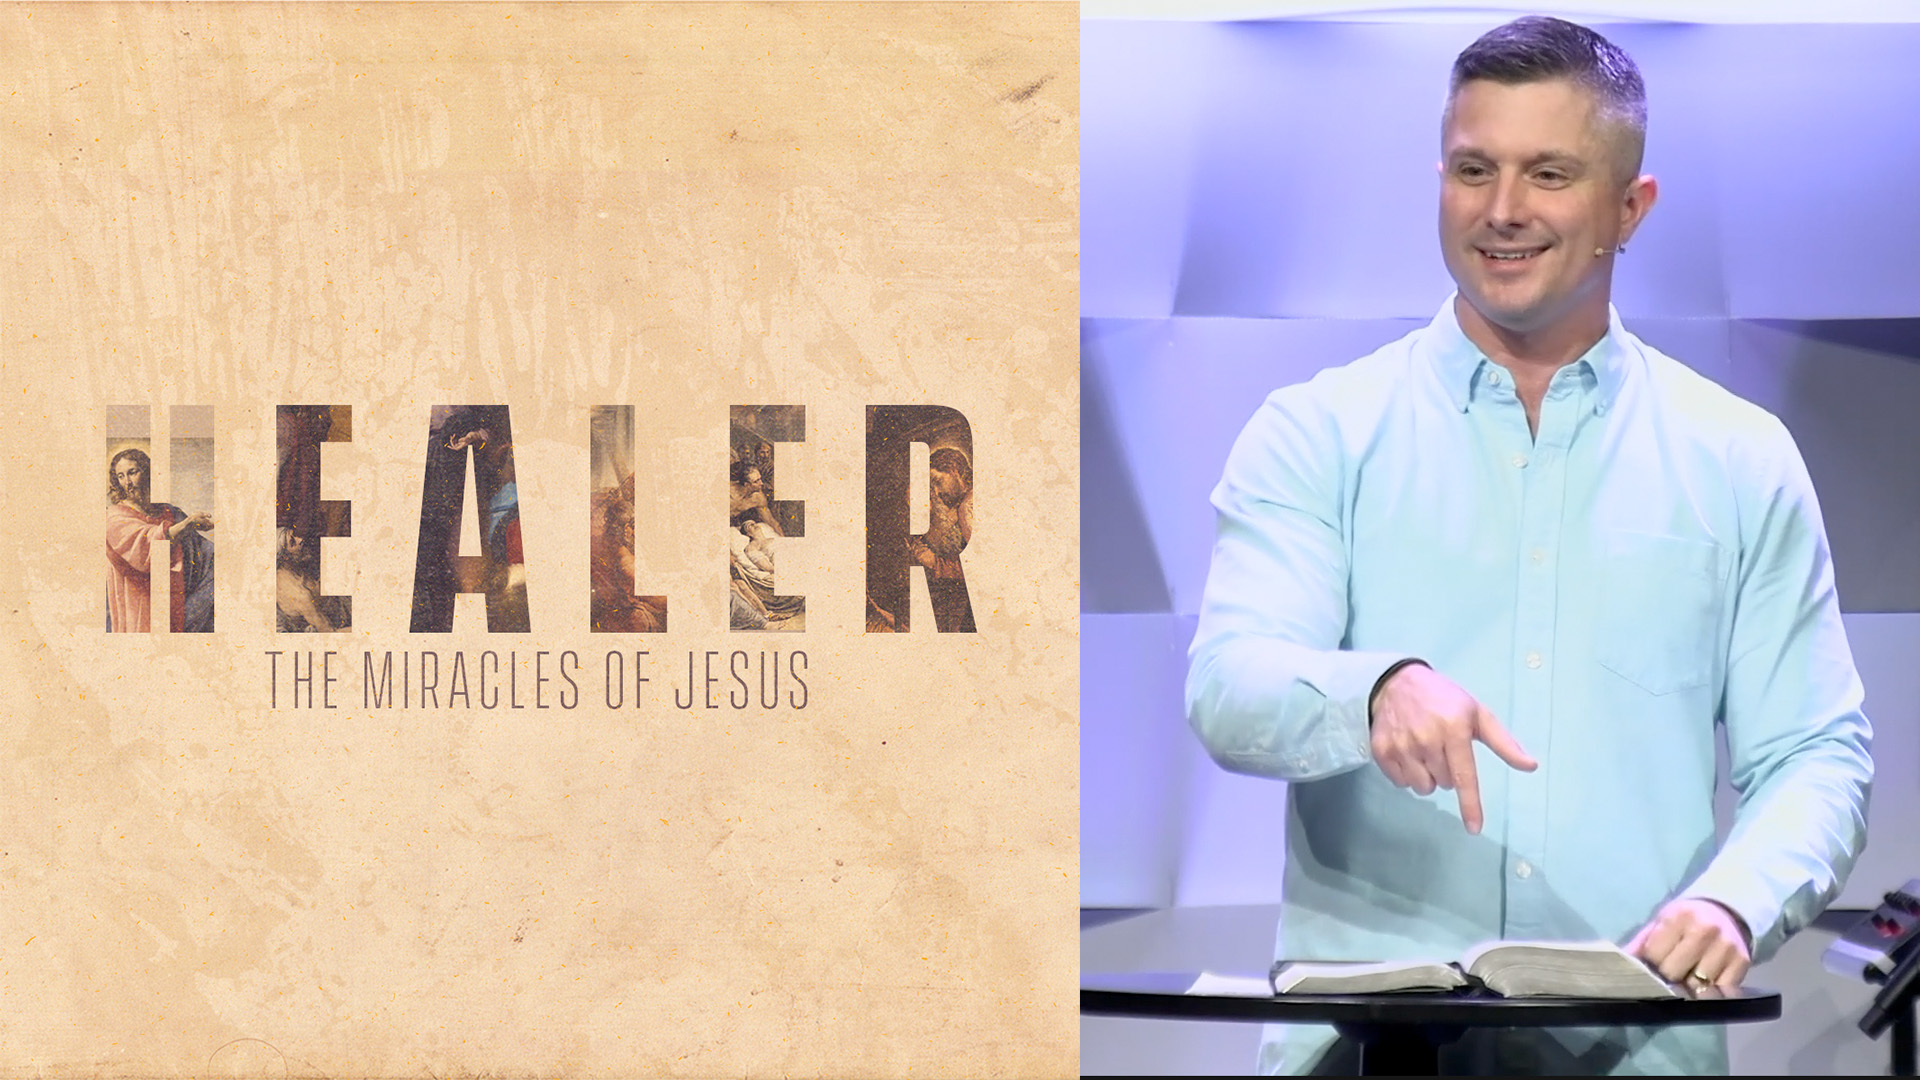 Healer - The Miracles of Jesus